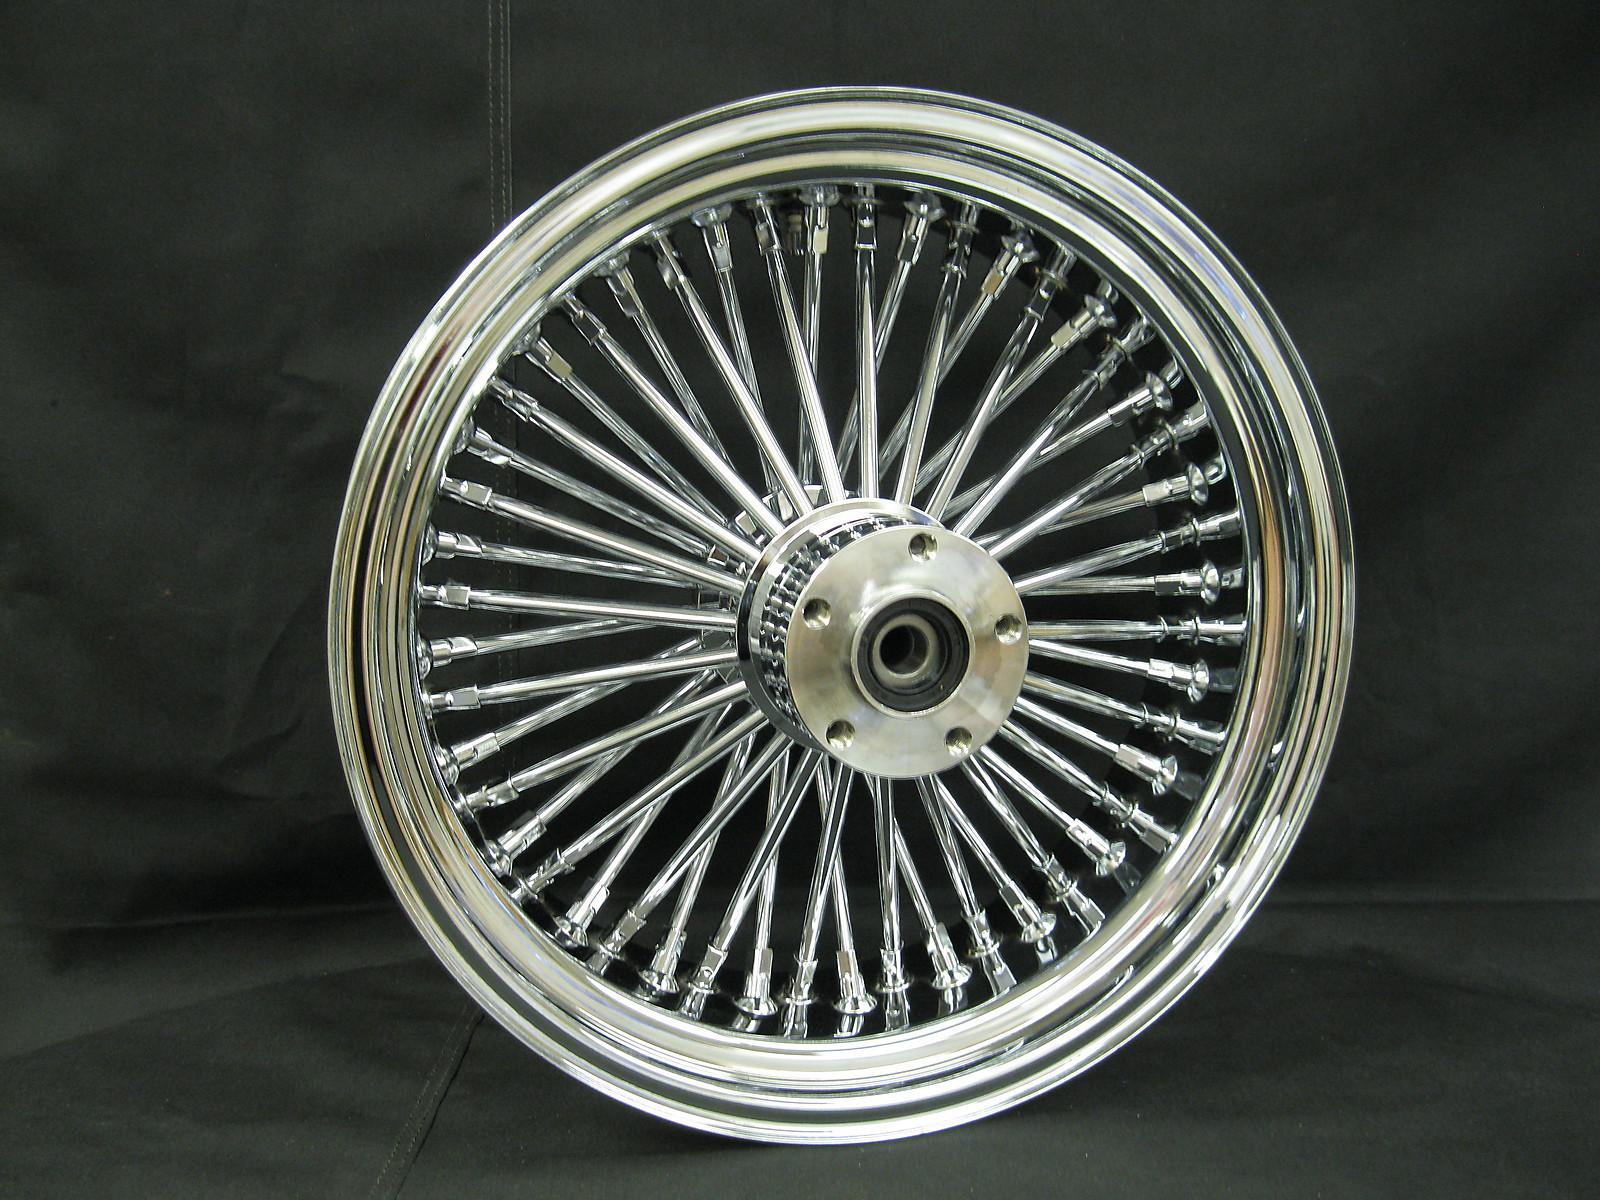 Chrome ultima 48 fat king spoke 16x3.5" front dd wheel for harley & customs